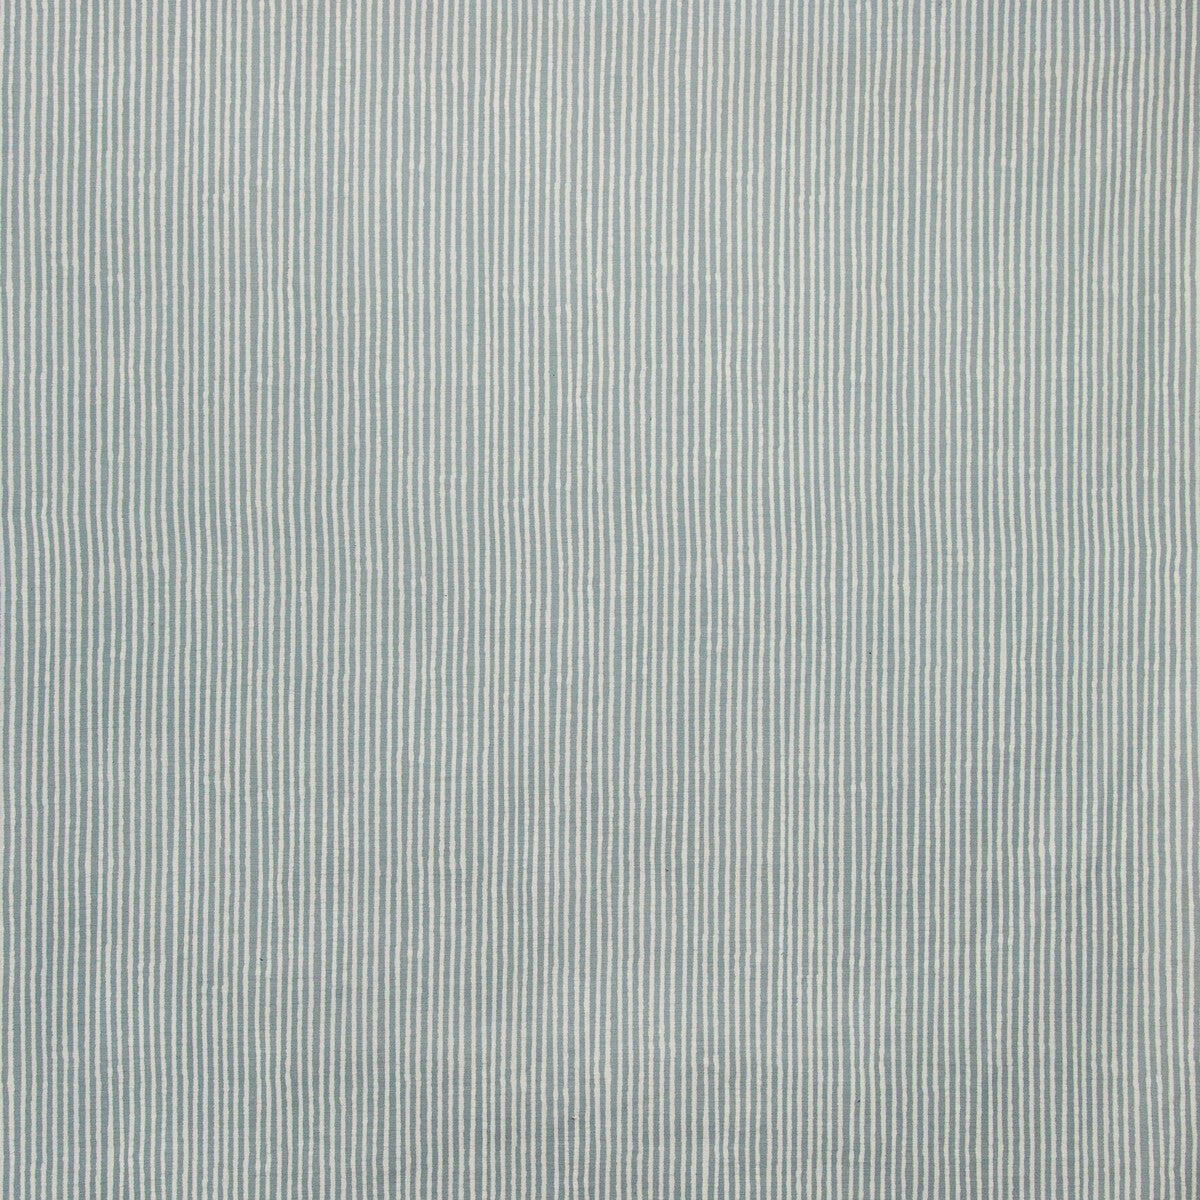 Bandol fabric in seafoam color - pattern 2019125.113.0 - by Lee Jofa